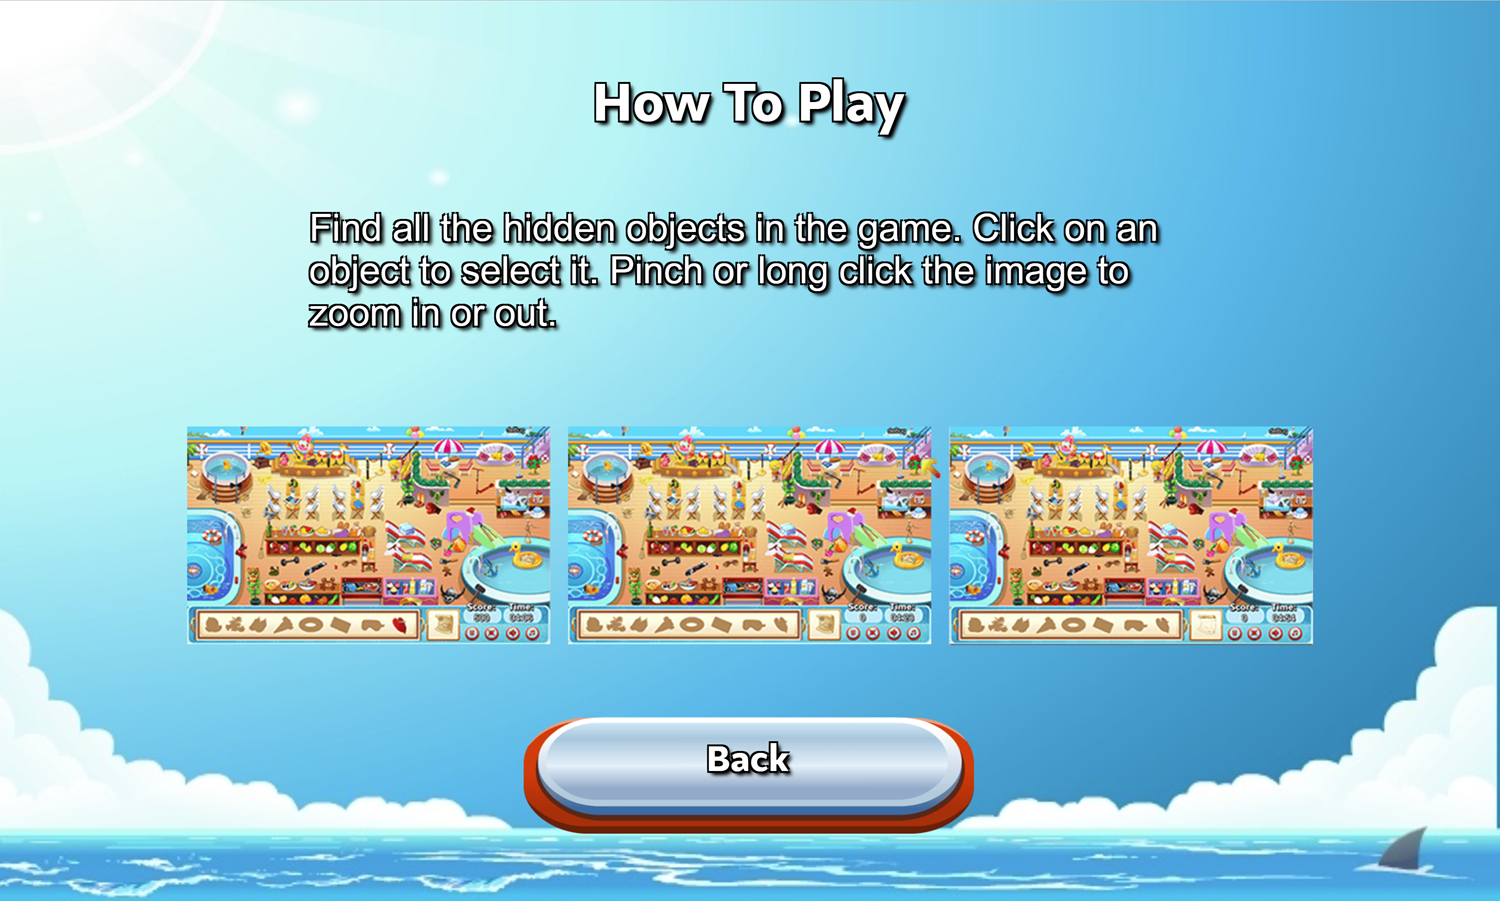 Cruise Ship Hidden Objects Game How to Play Screen Screenshot.